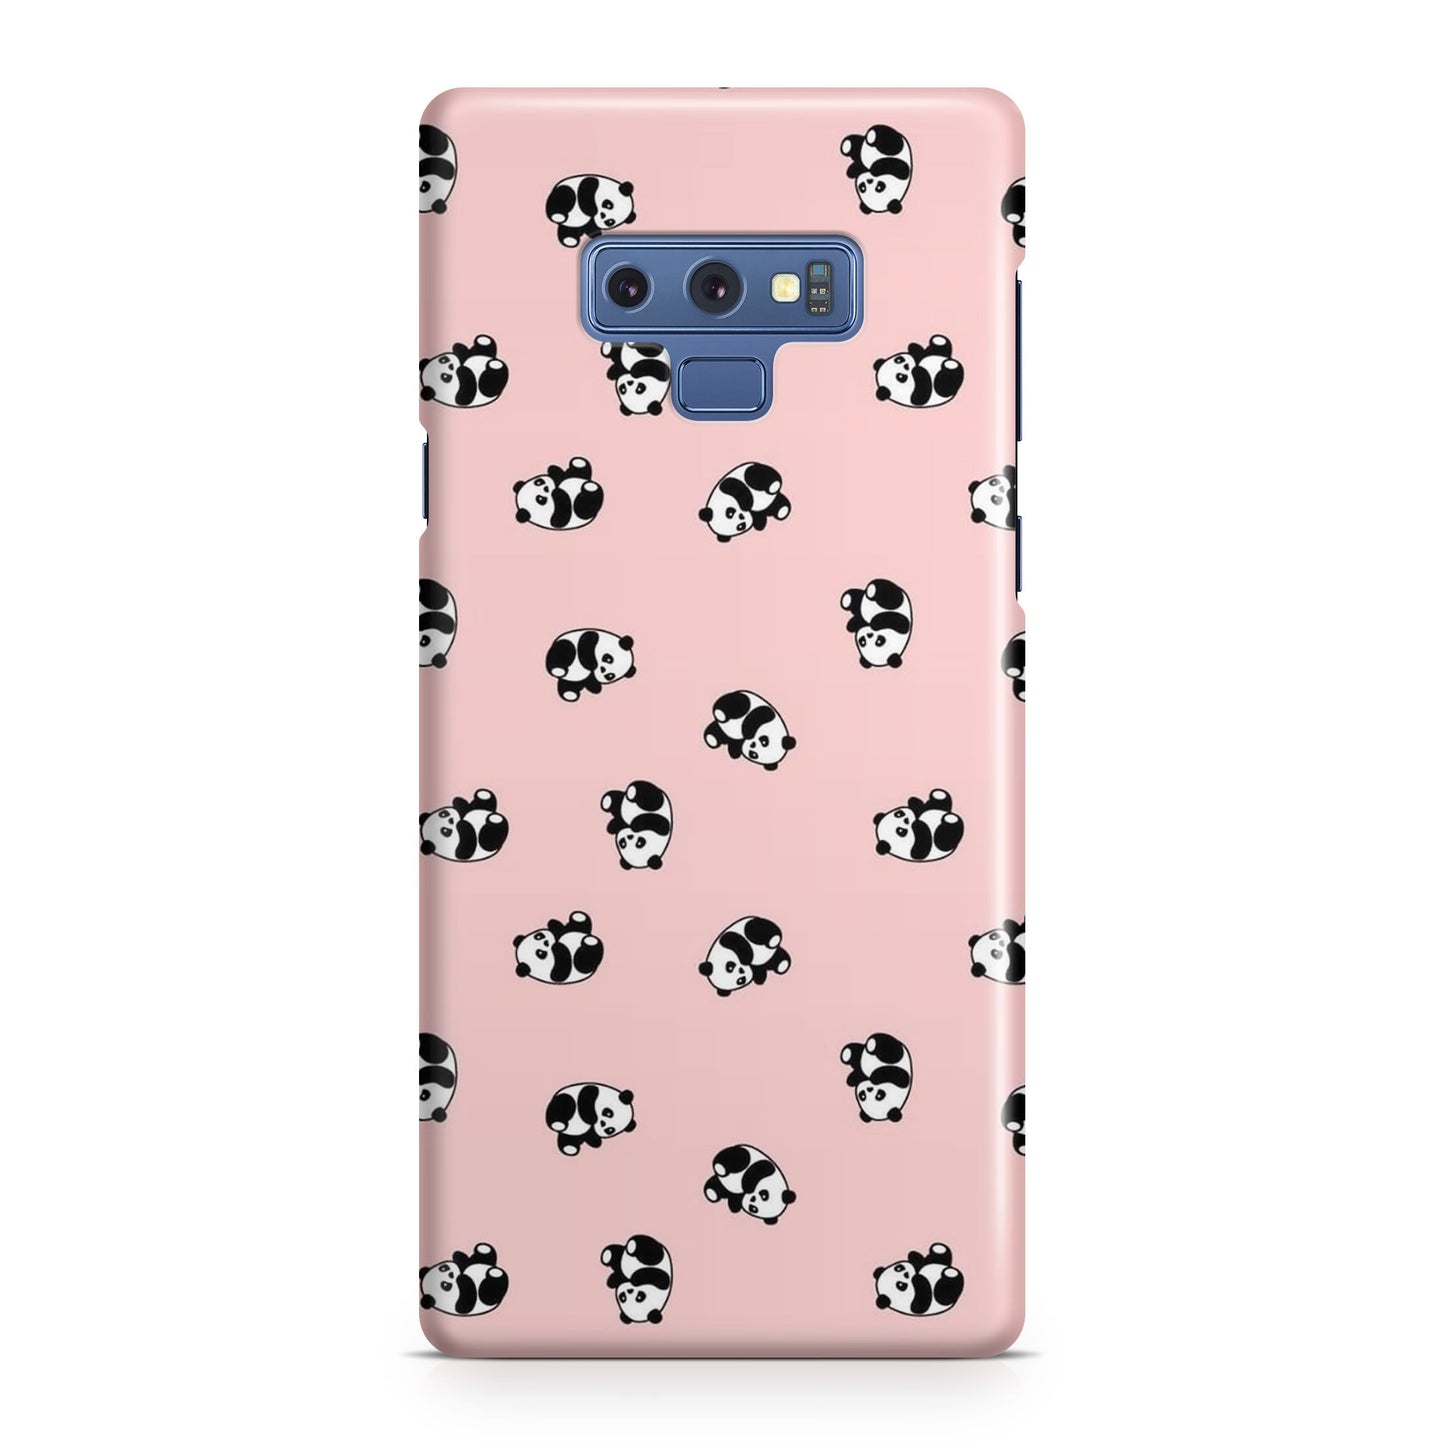 Pandas Pattern Galaxy Note 9 Case